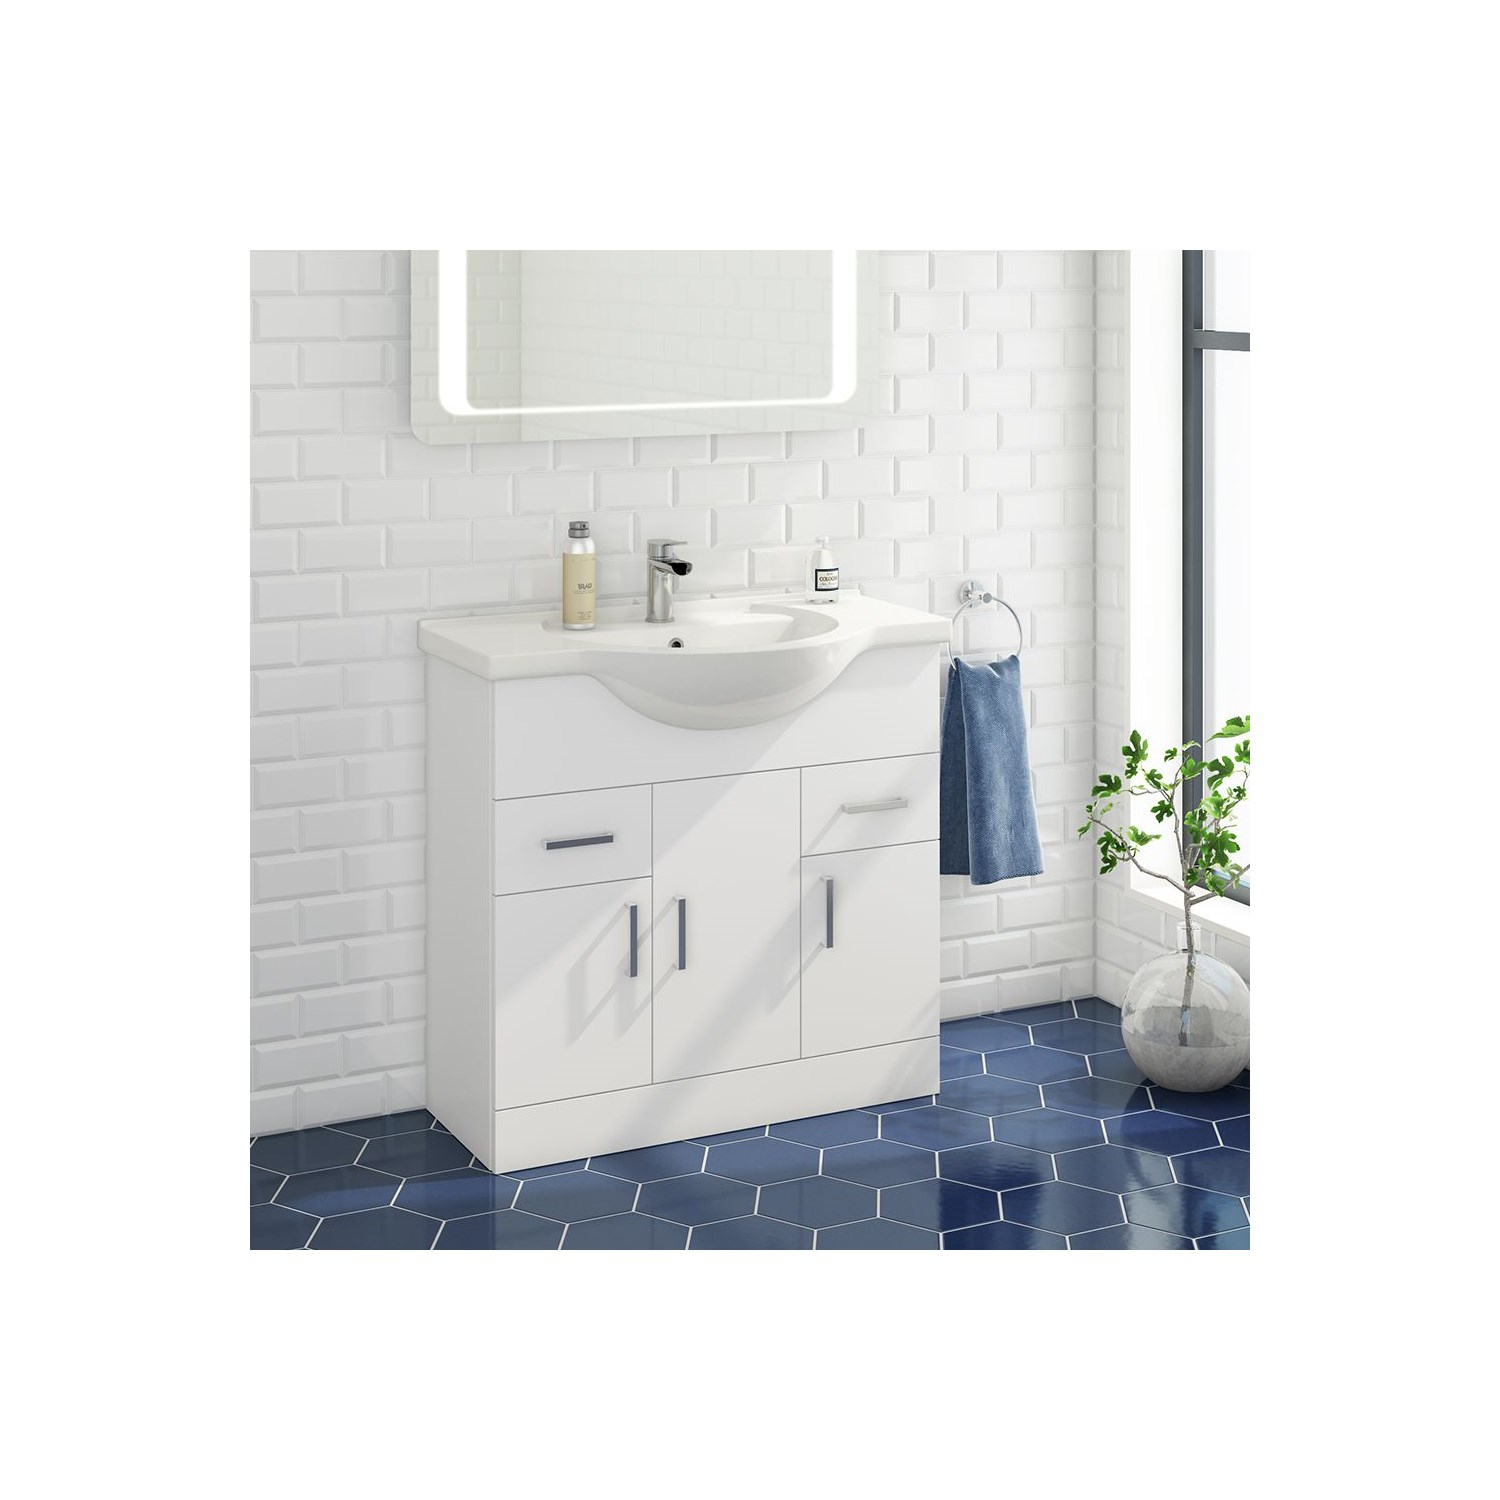 Waste ESSENTIALS 850mm Bathroom Vanity Unit & Basin Sink Gloss White Floorstanding Tap 